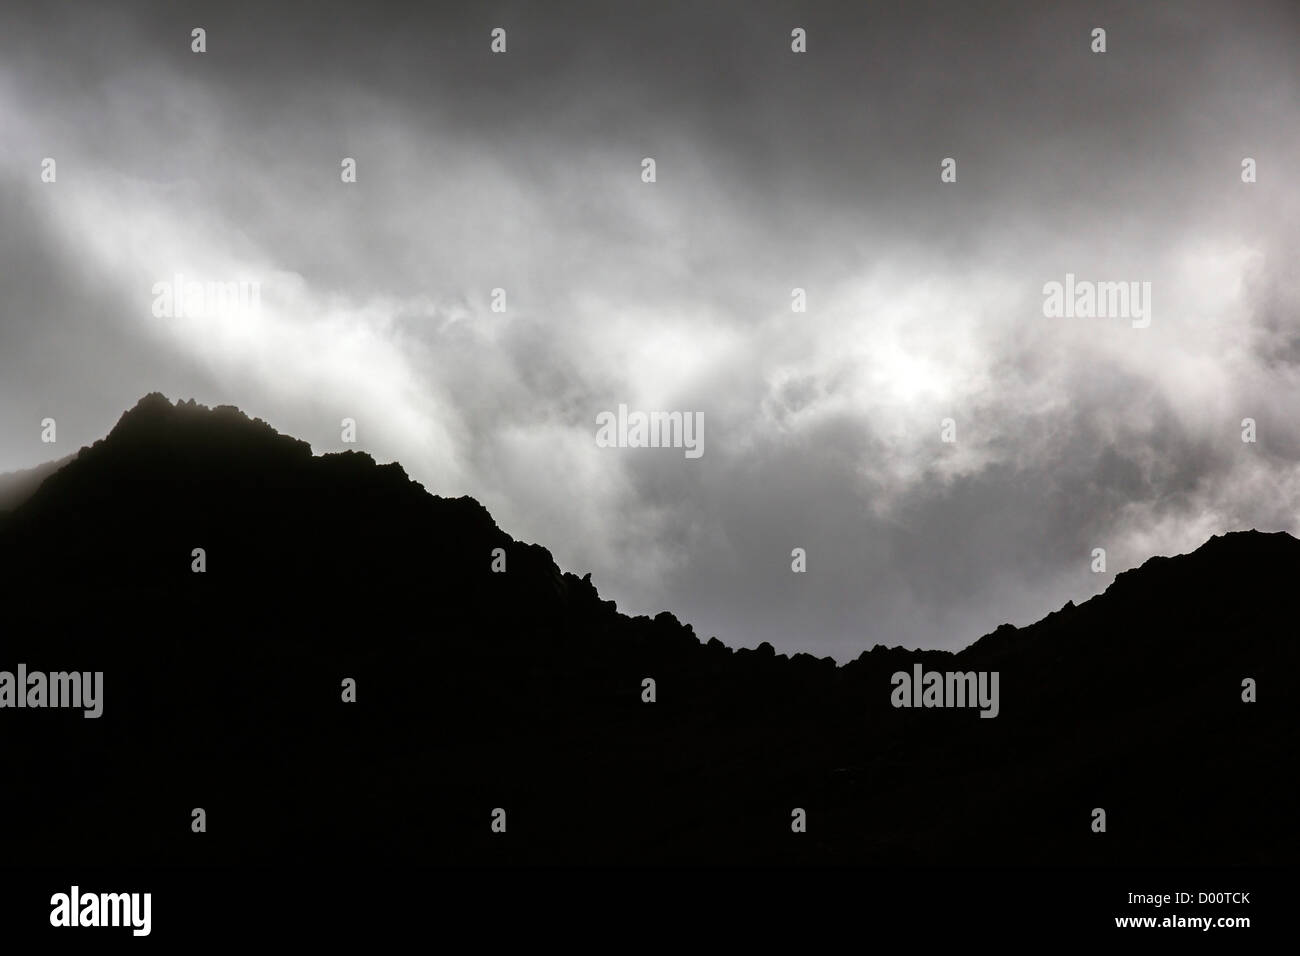 Dramatic grey cloudy misty skies over silhouette of Black Cuillin Mountain ridge, Sligachan, Isle of Skye, Scotland, UK Stock Photo